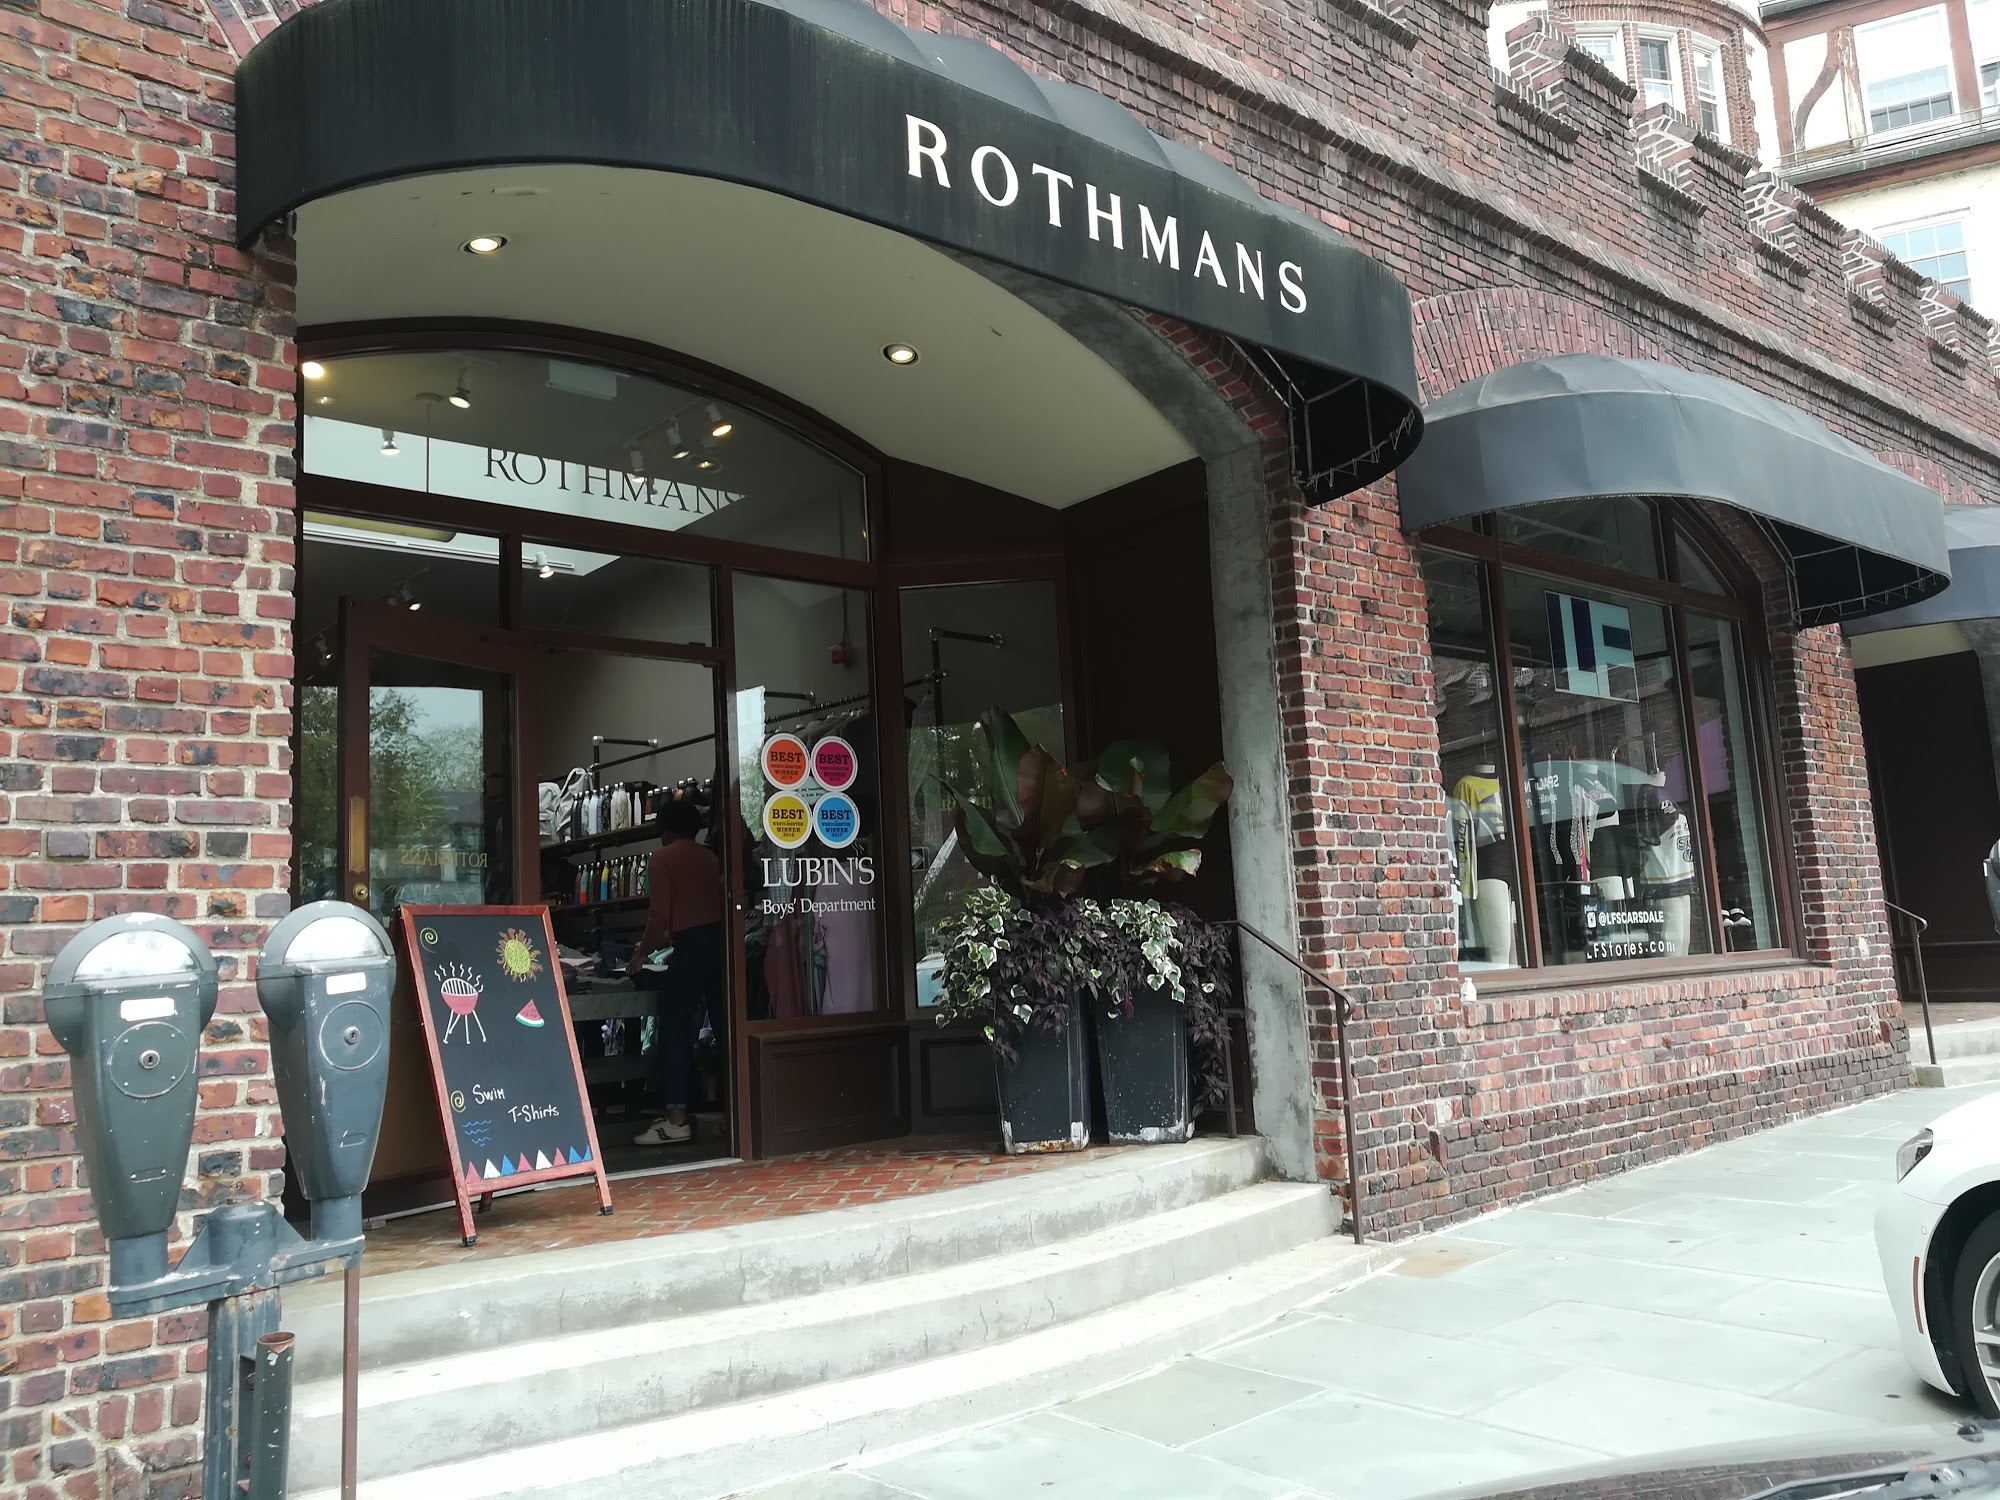 Rothman's